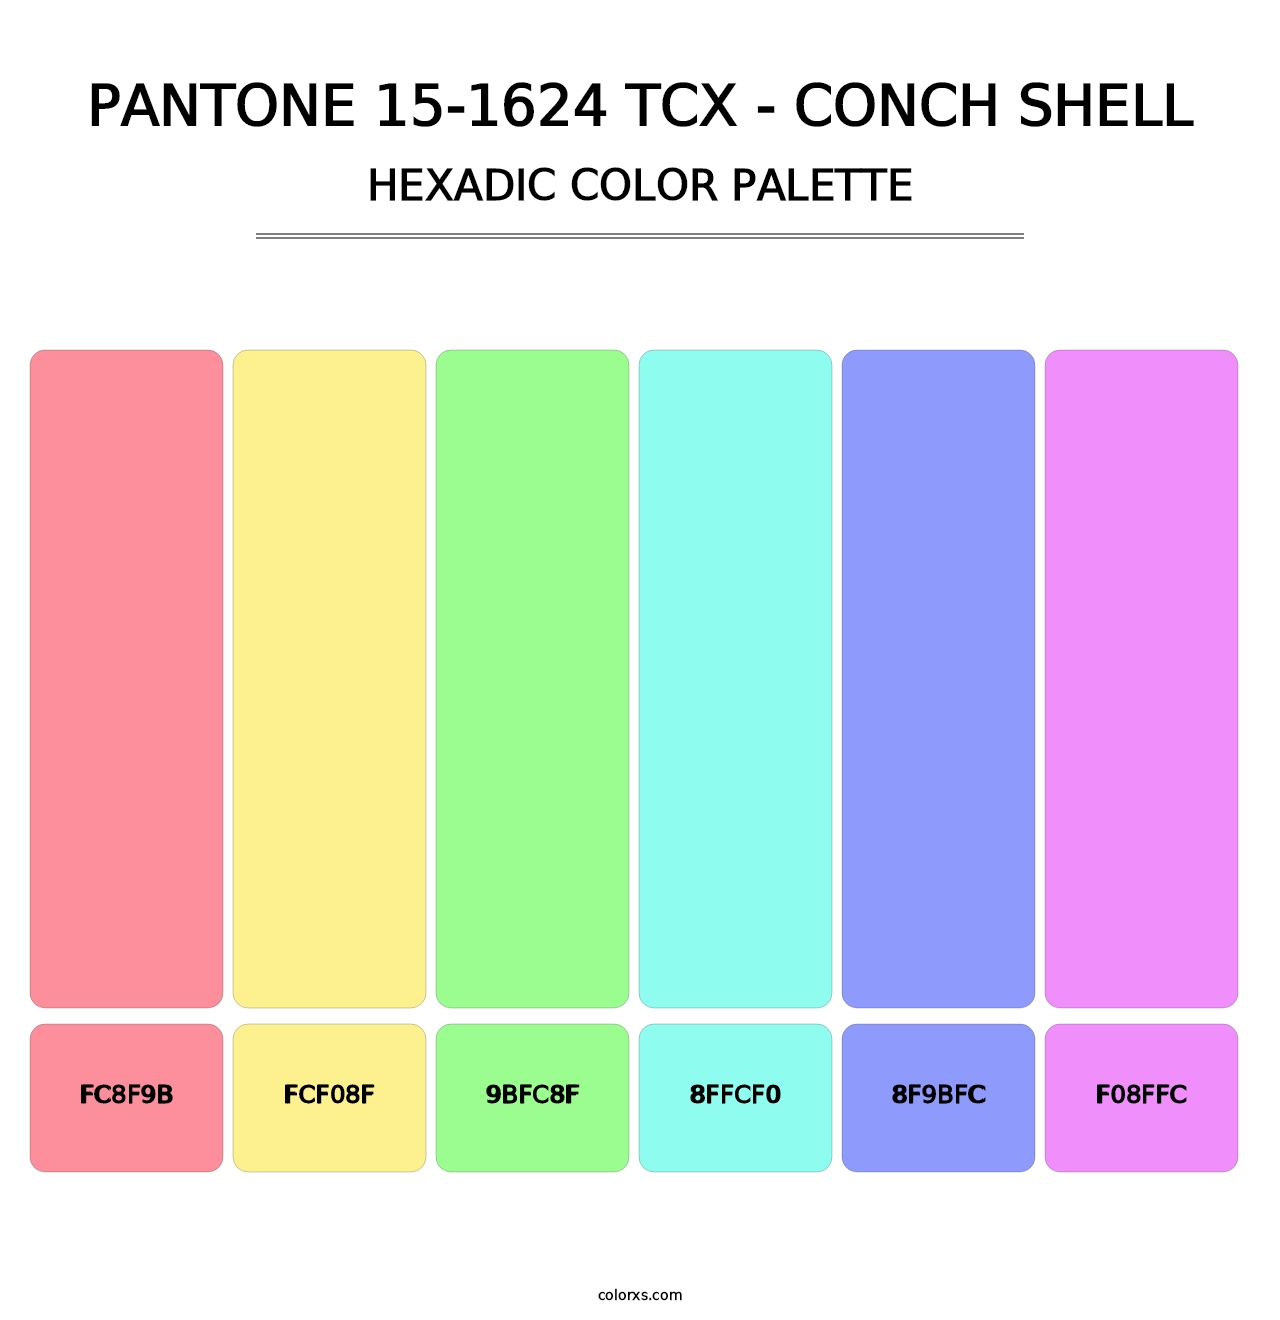 PANTONE 15-1624 TCX - Conch Shell - Hexadic Color Palette